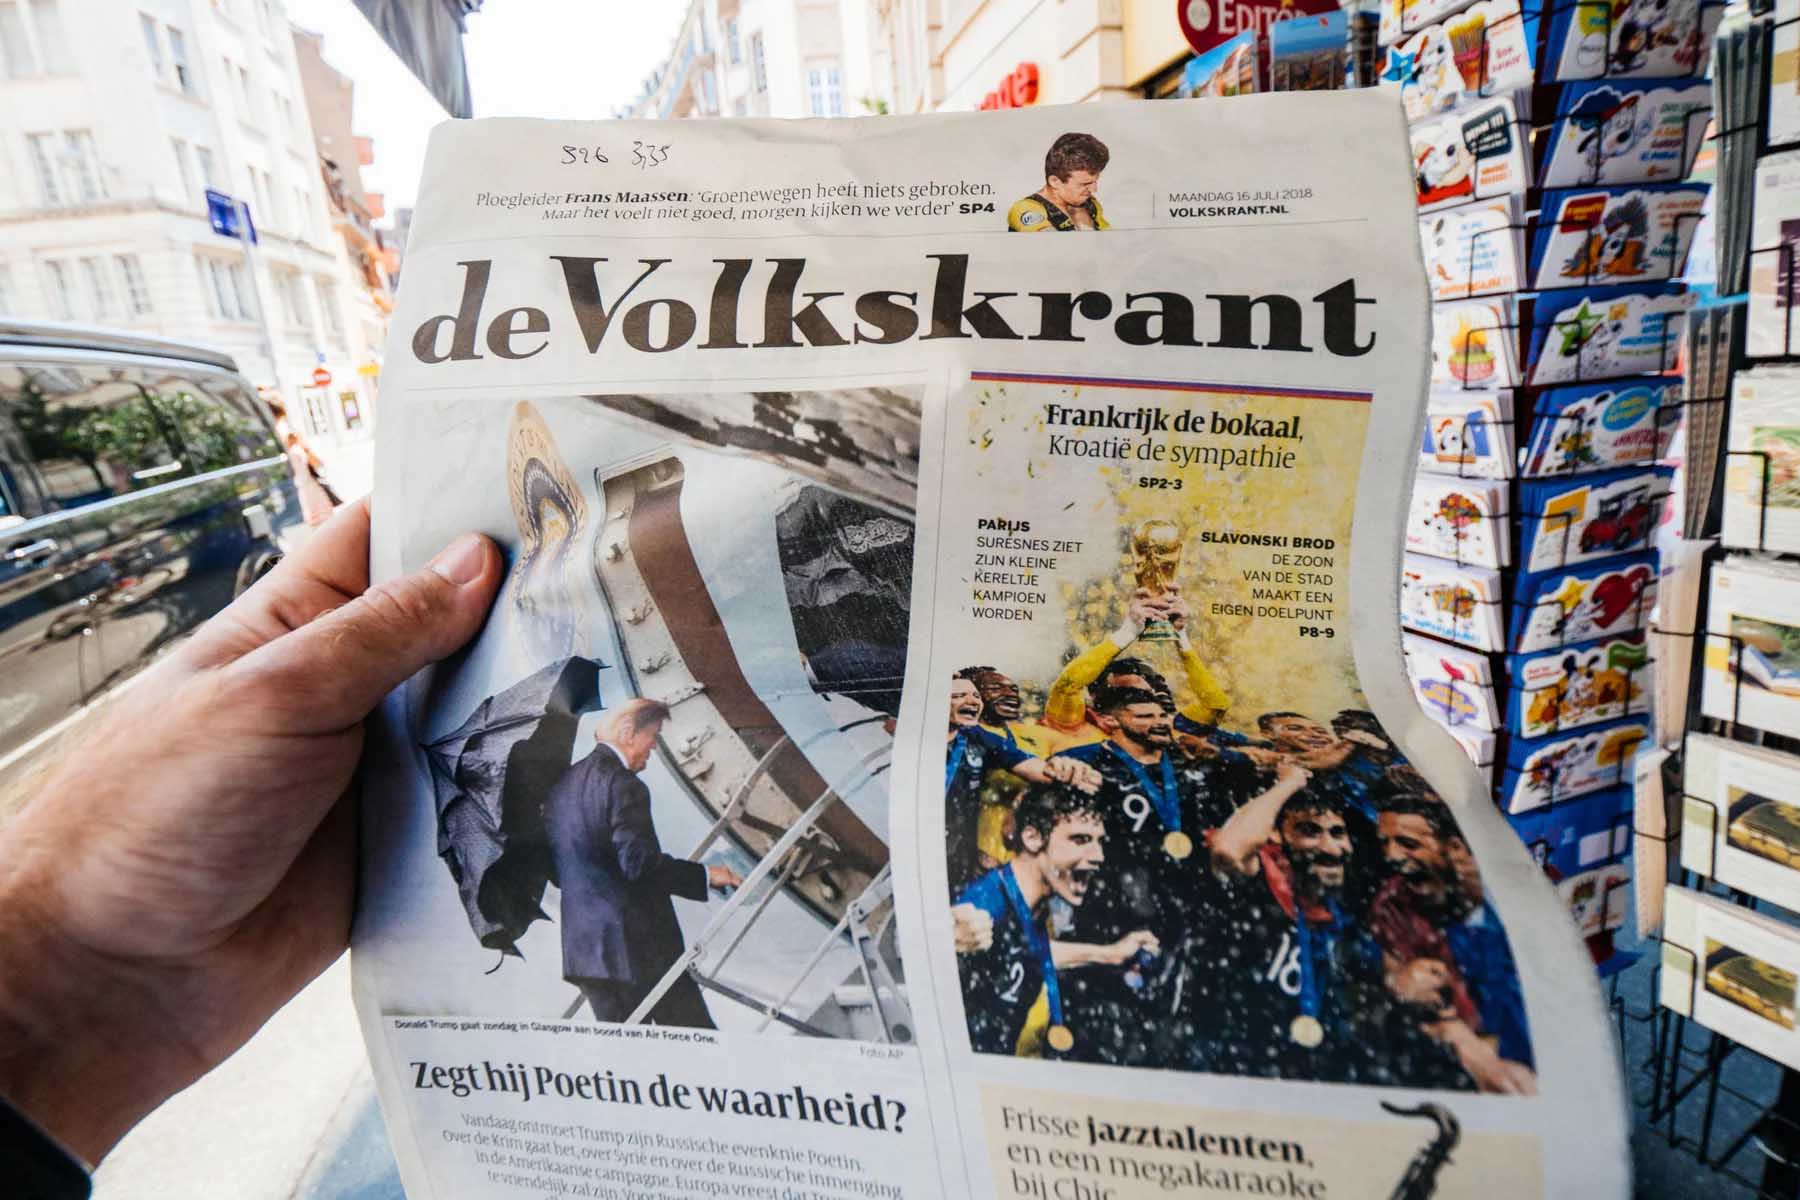 Someone holding a copy of the Dutch newspaper De Volkskrant.